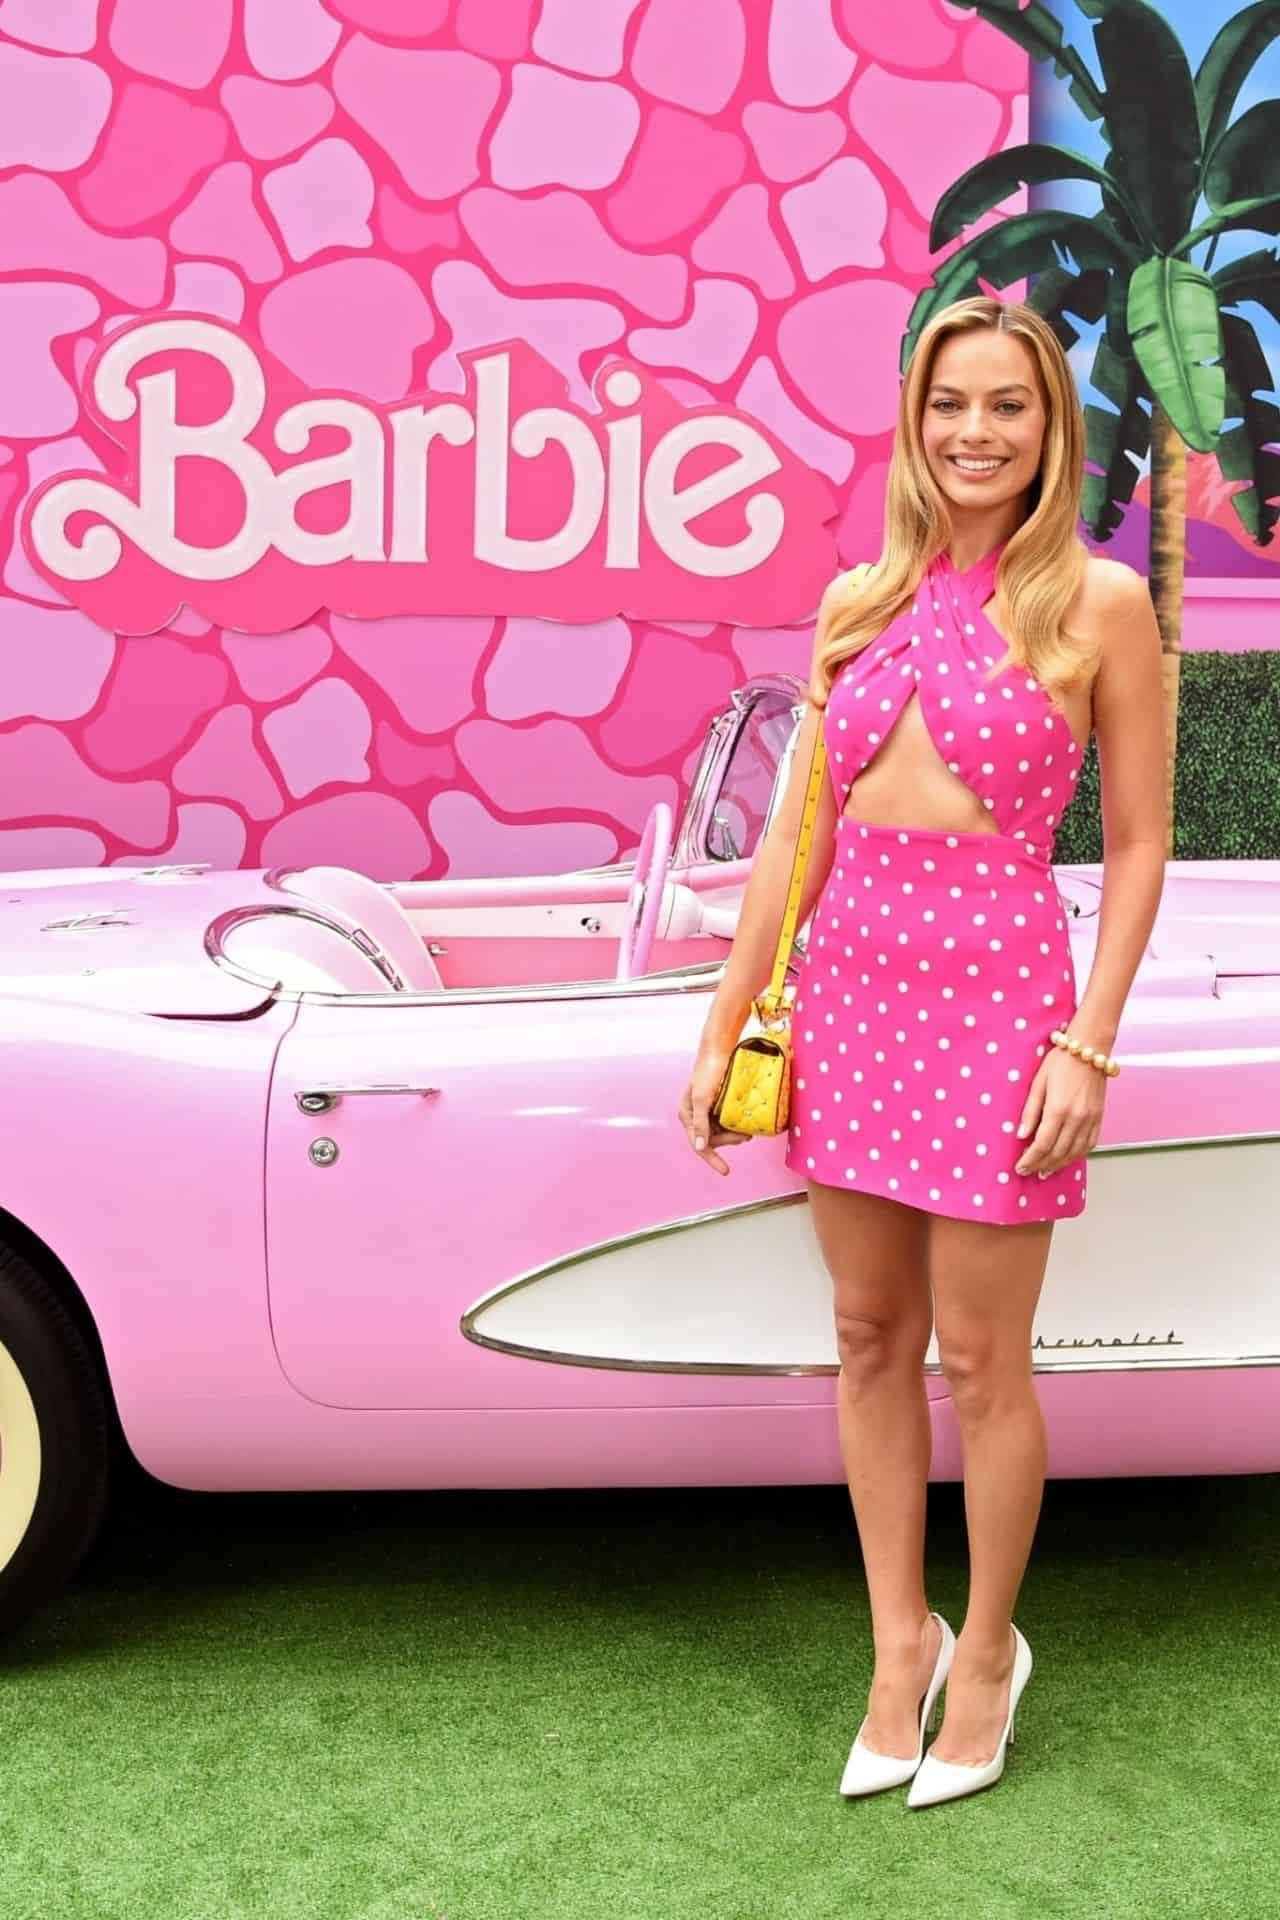 Margot Robbie Amazes at "Barbie" Photocall in Polka Dot Pink Mini Dress